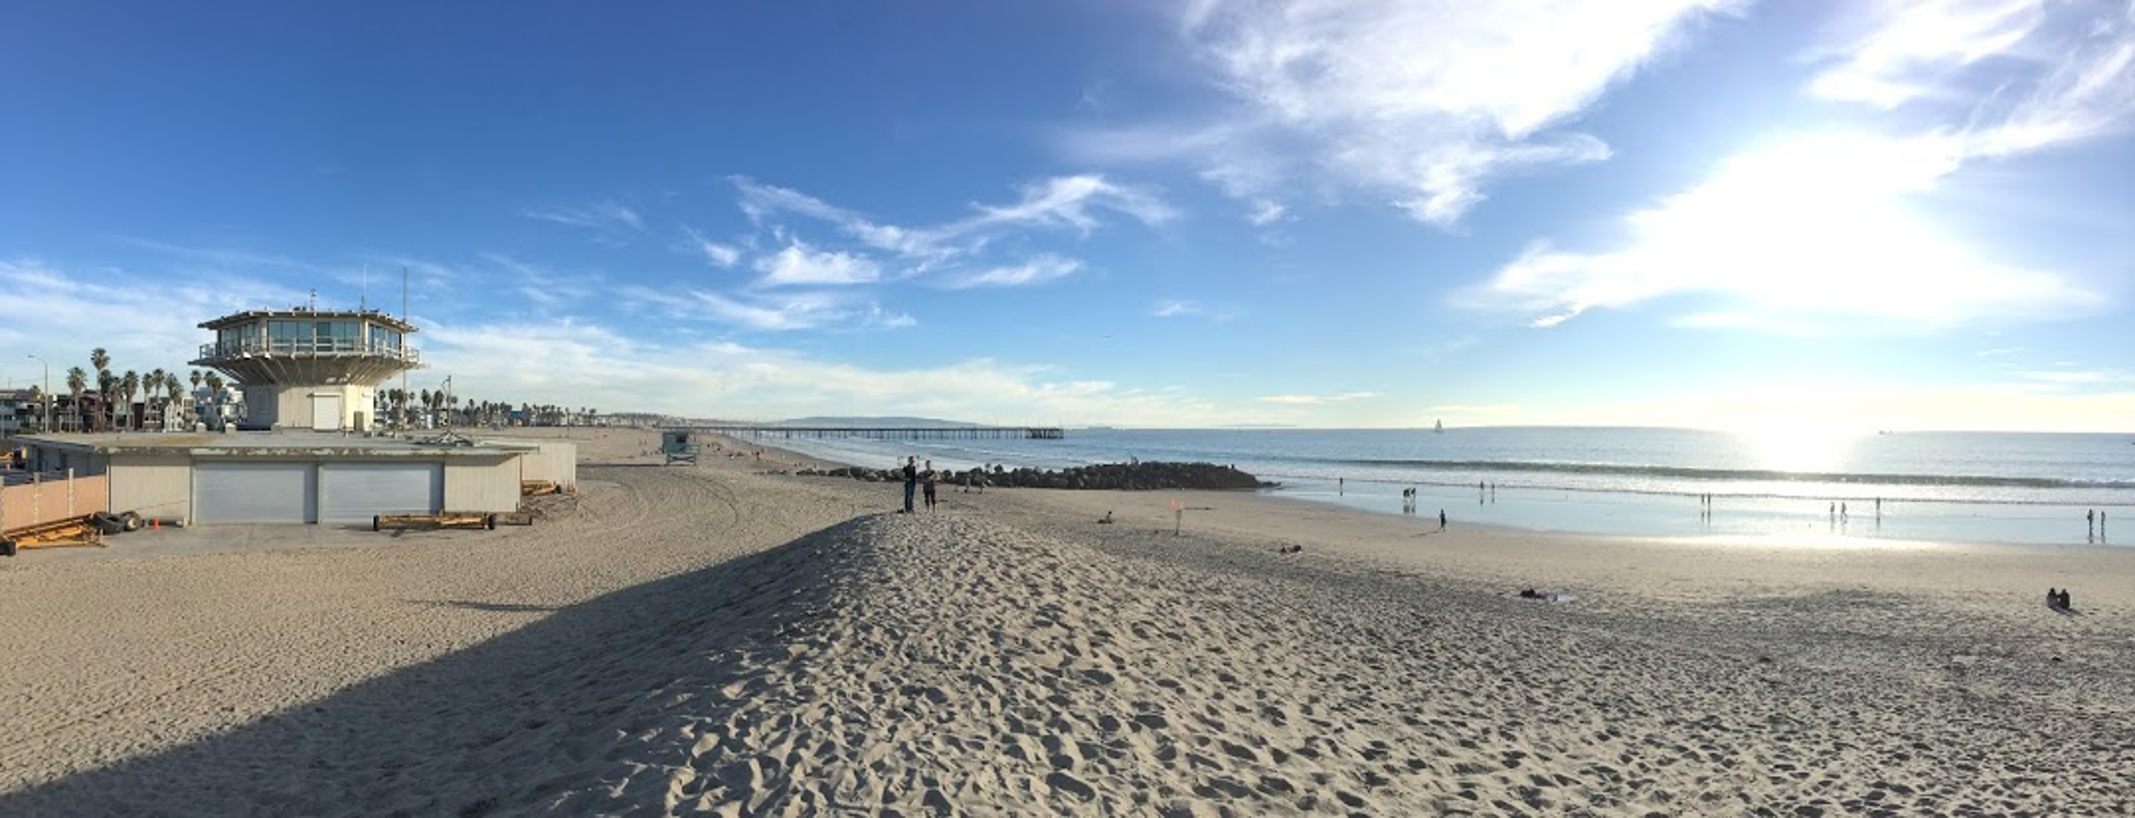 Panorama of sand berm on Venice beach and lifeguard tower